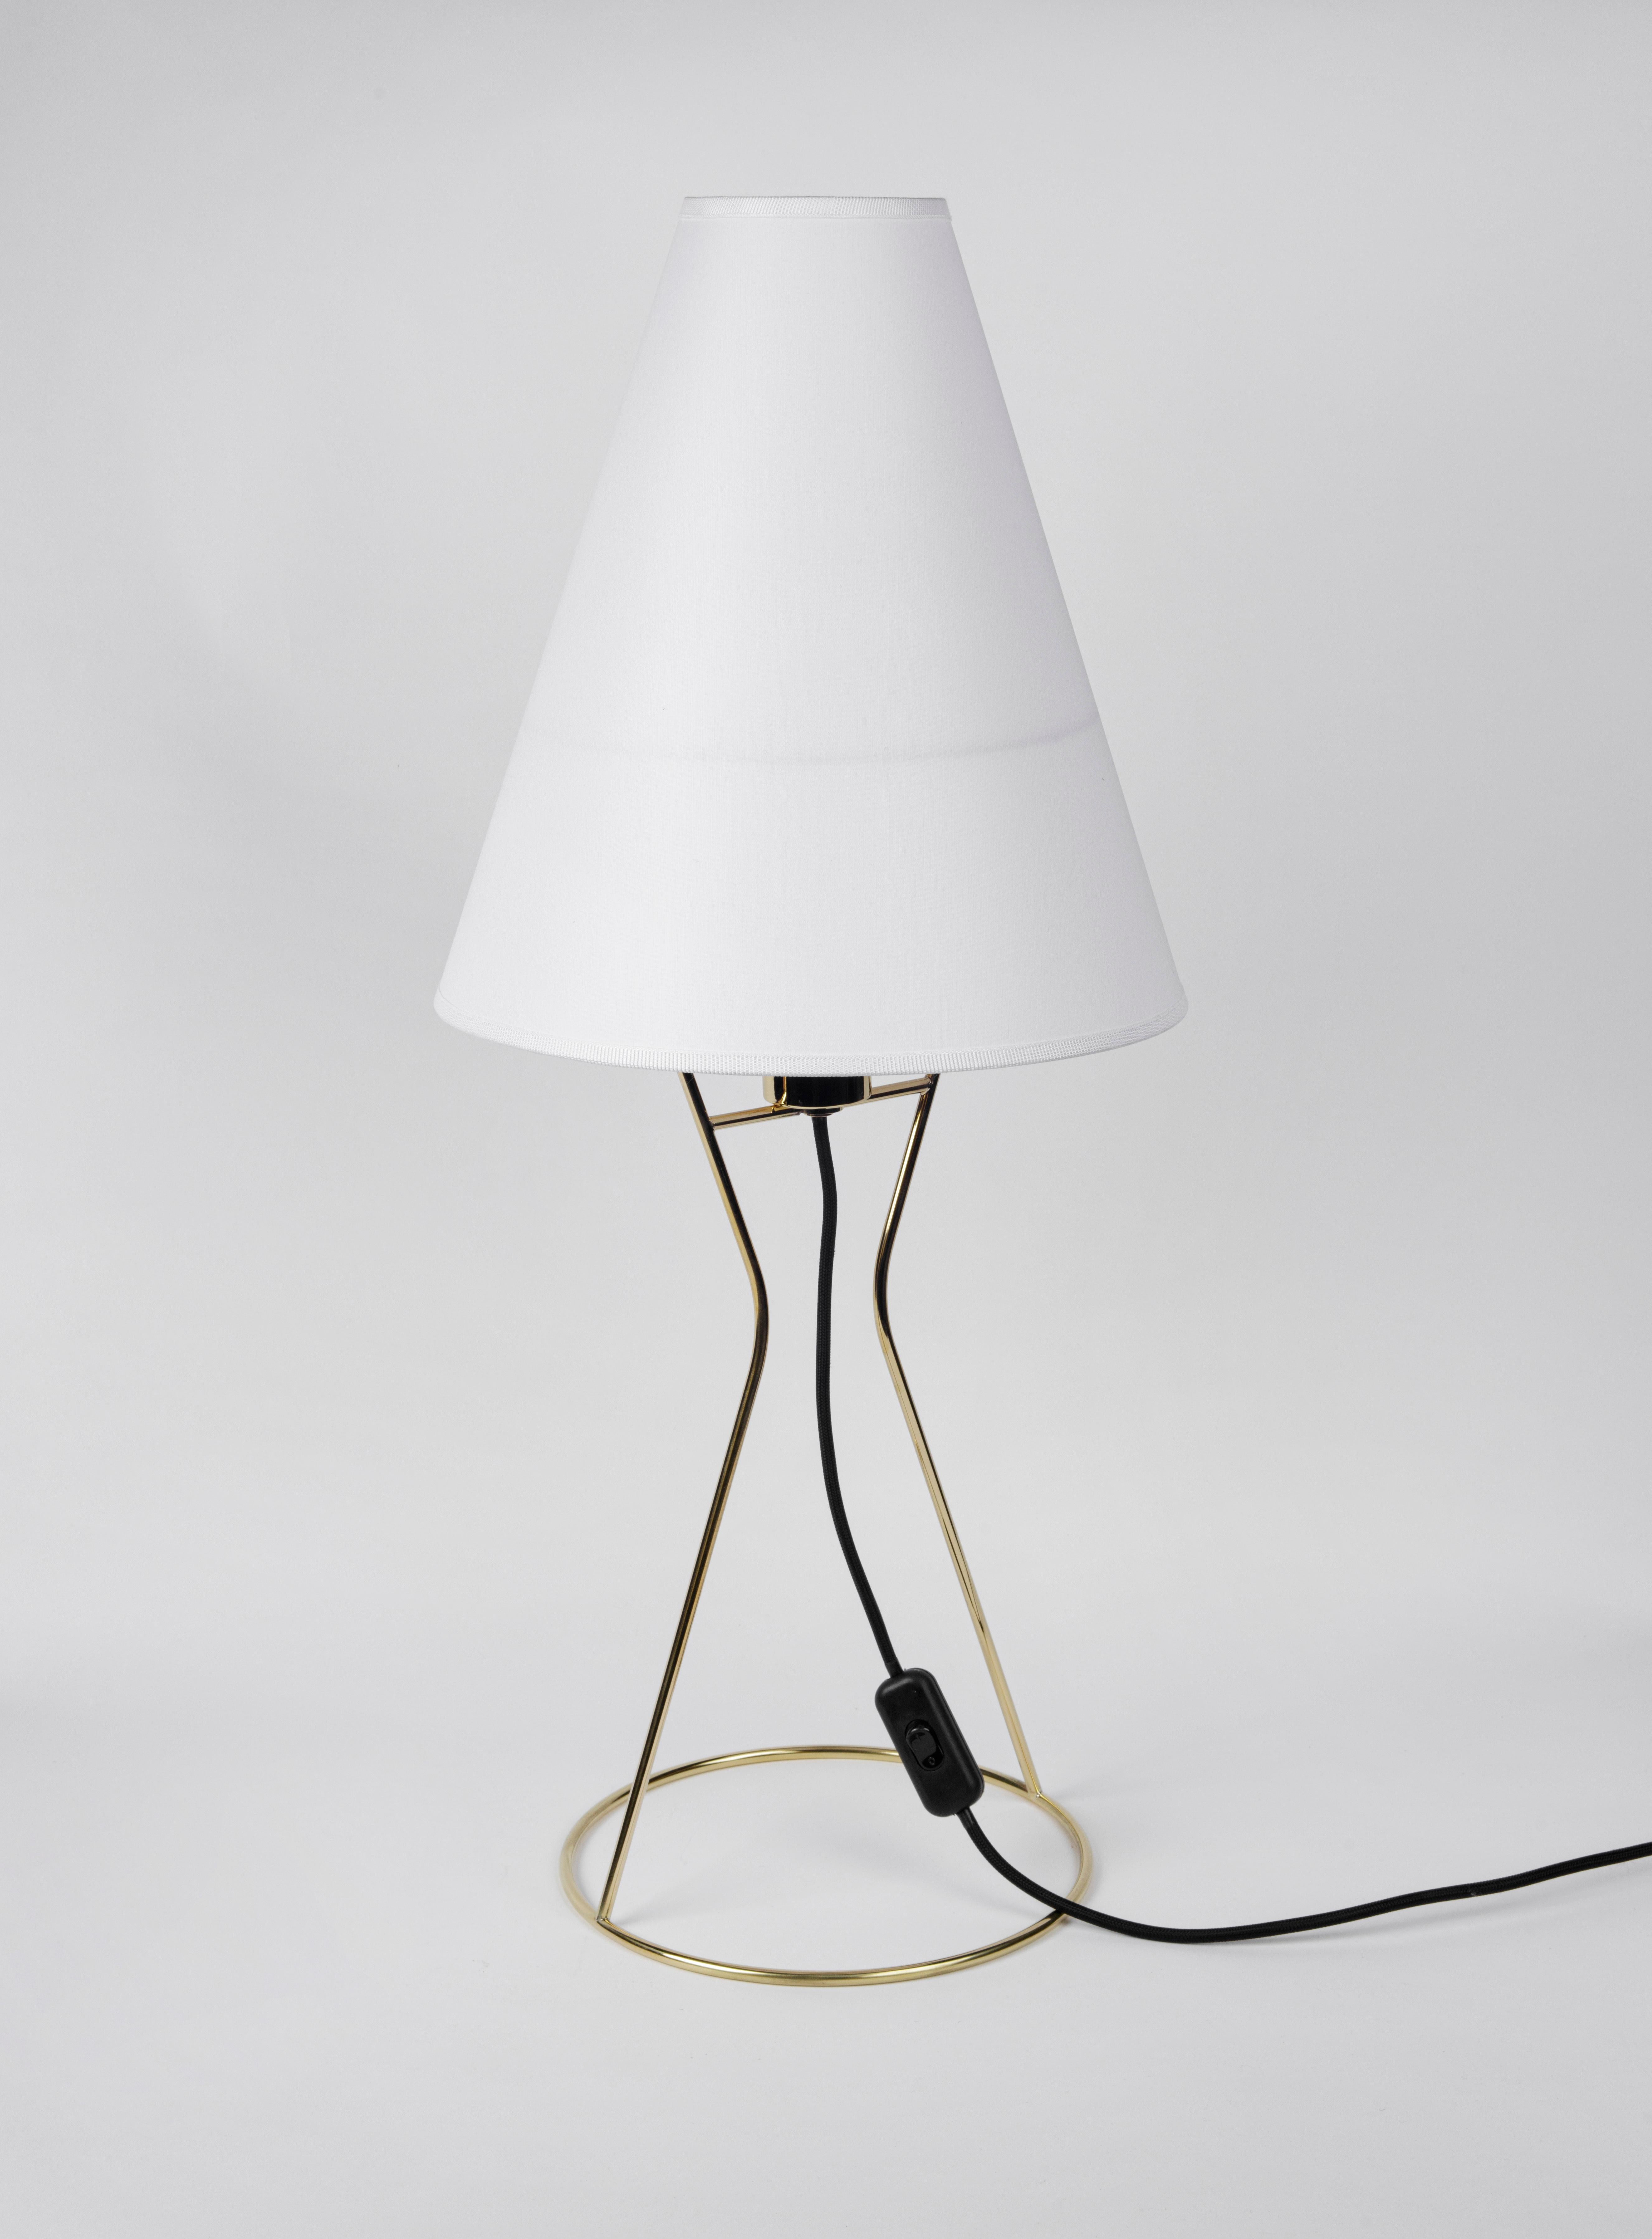 Mid-Century Modern Carl Auböck #4105-2 Vice Versa Table Lamp For Sale